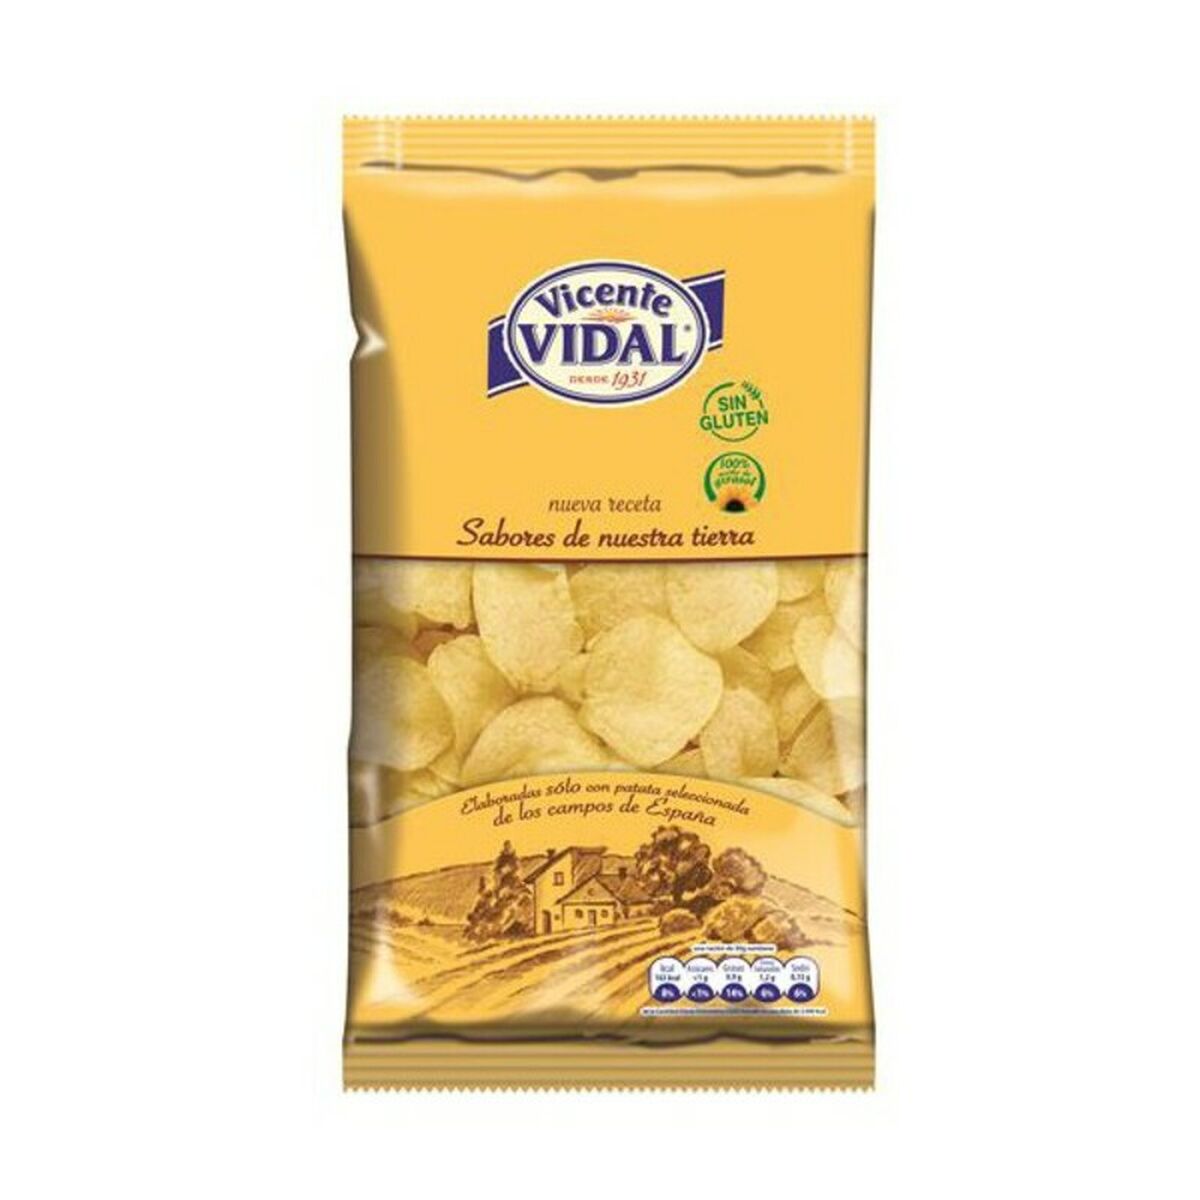 Chips Vicente Vidal (160 g)